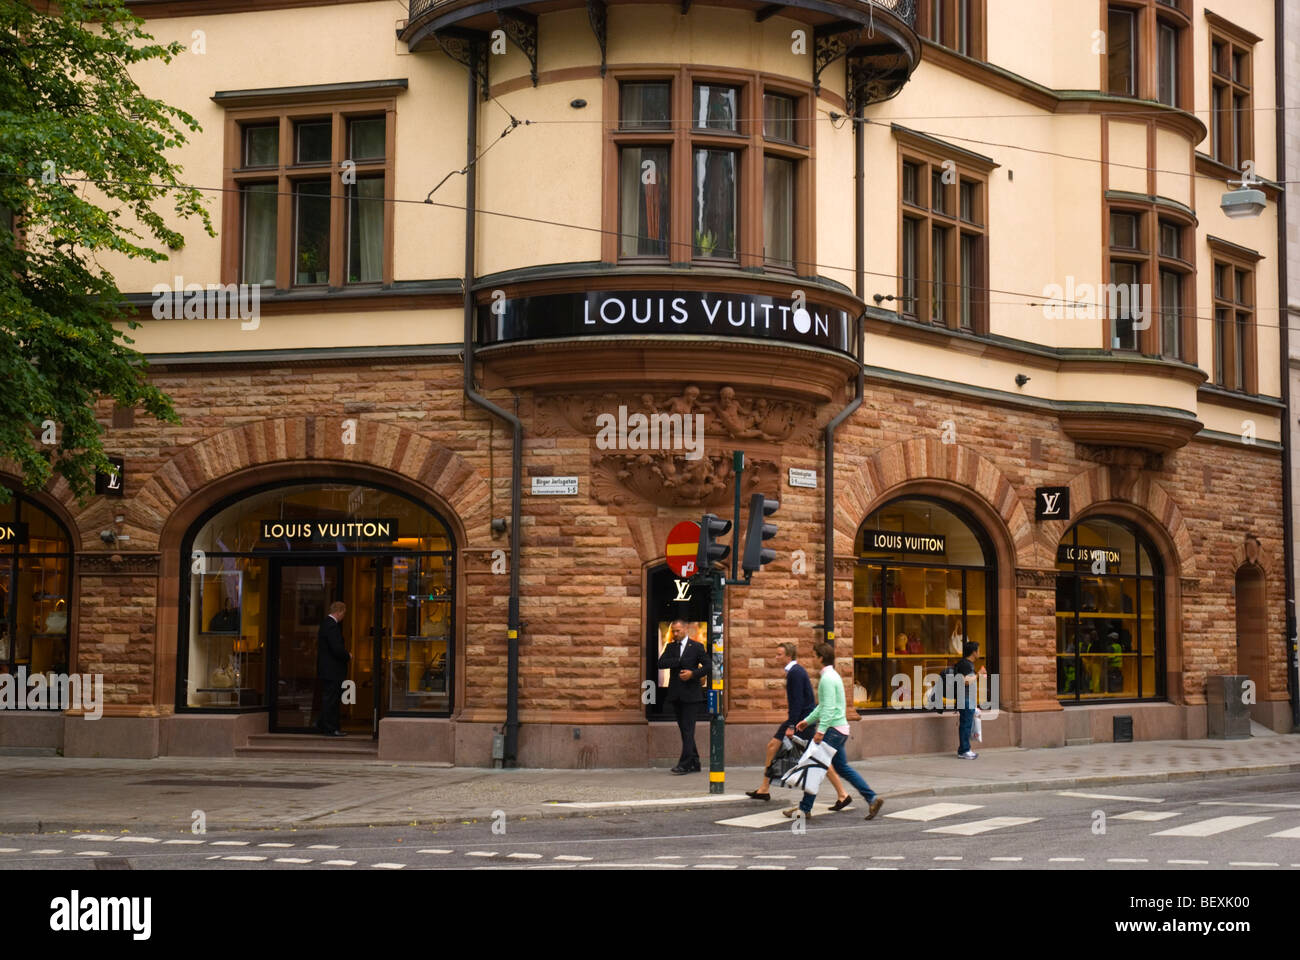 Louis Vuitton store Stureplan square Stockholm Sweden Europe Stock Photo, Royalty Free Image ...